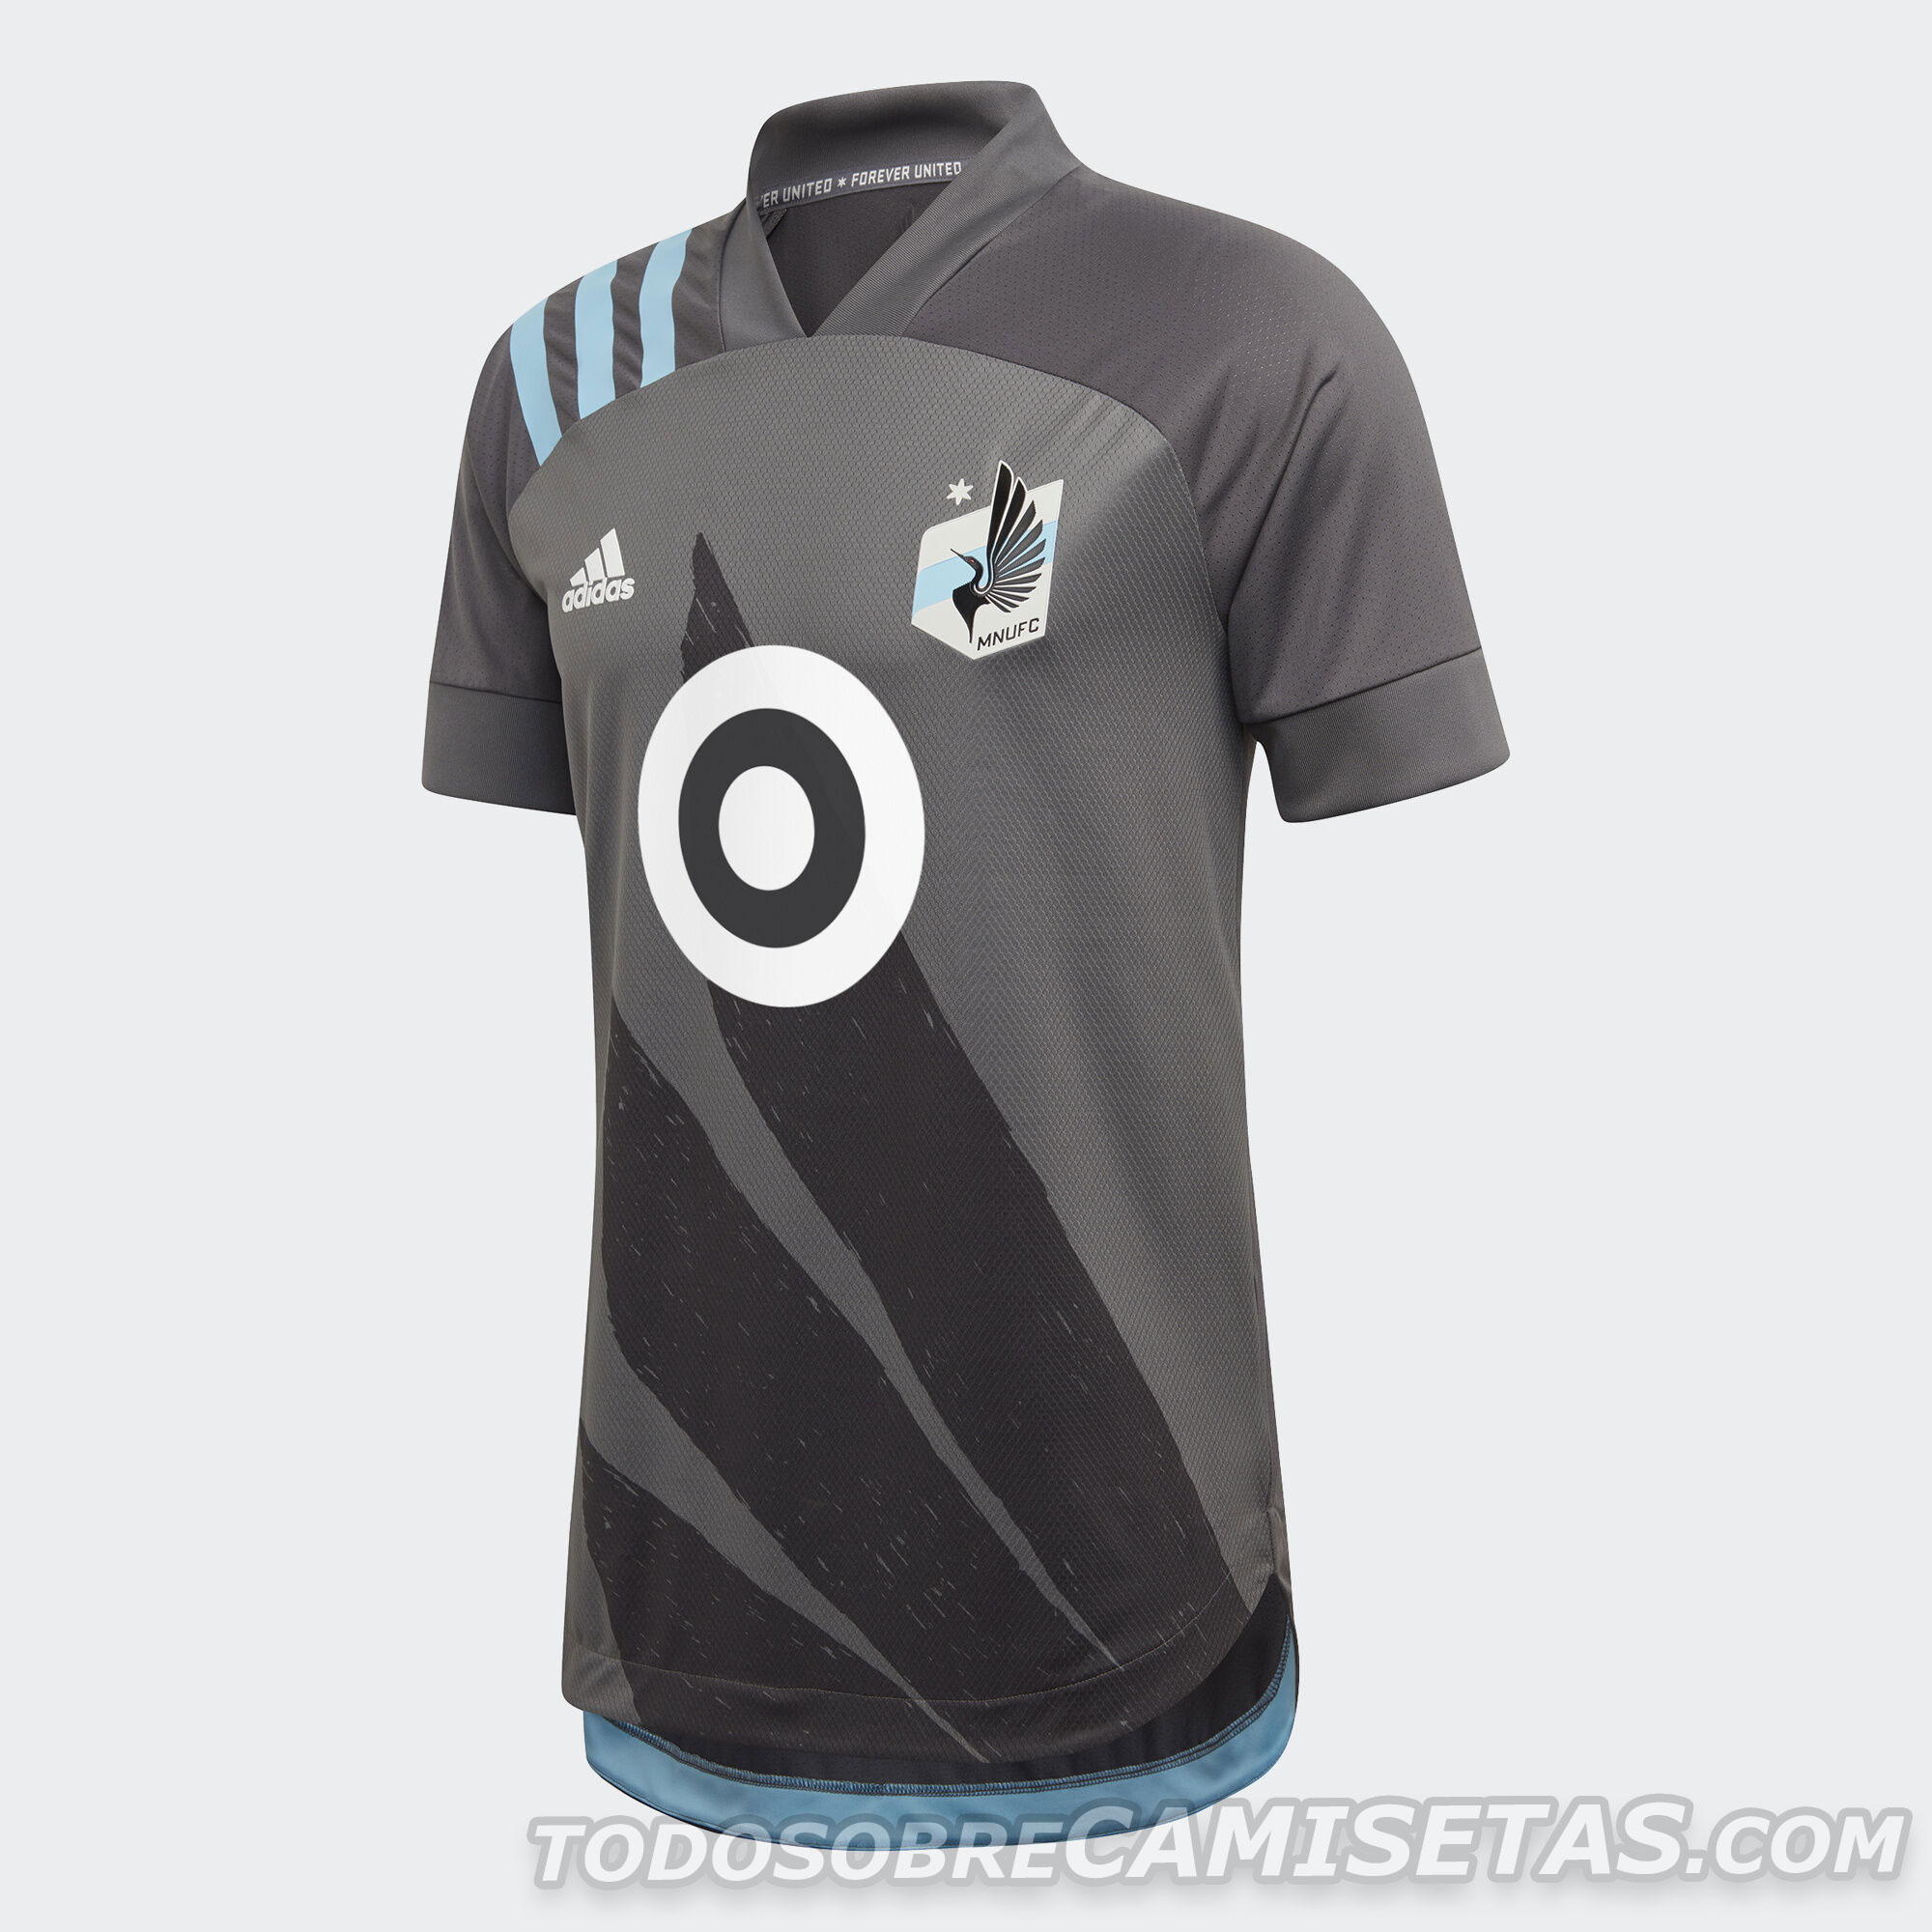 New MLS jerseys for 2020 season leaked - SBI Soccer